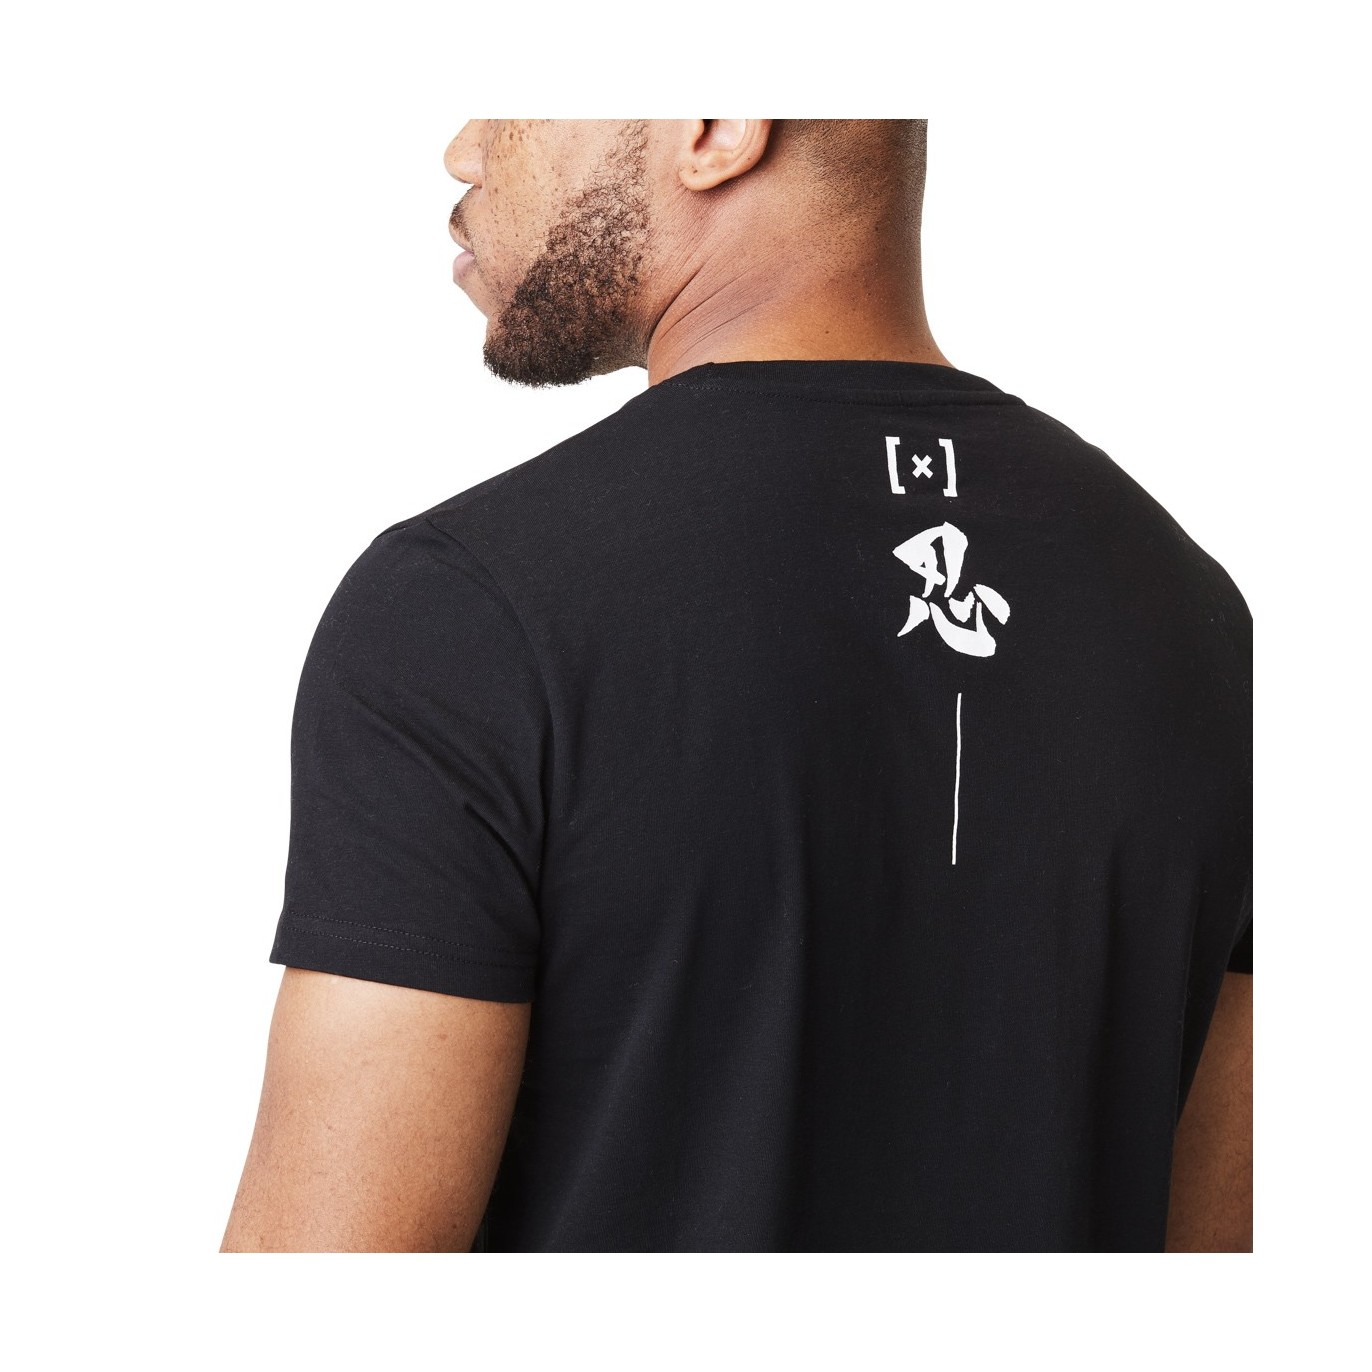 T-shirt Naruto Shippuden Homme Noir Capslab Capslab - 4